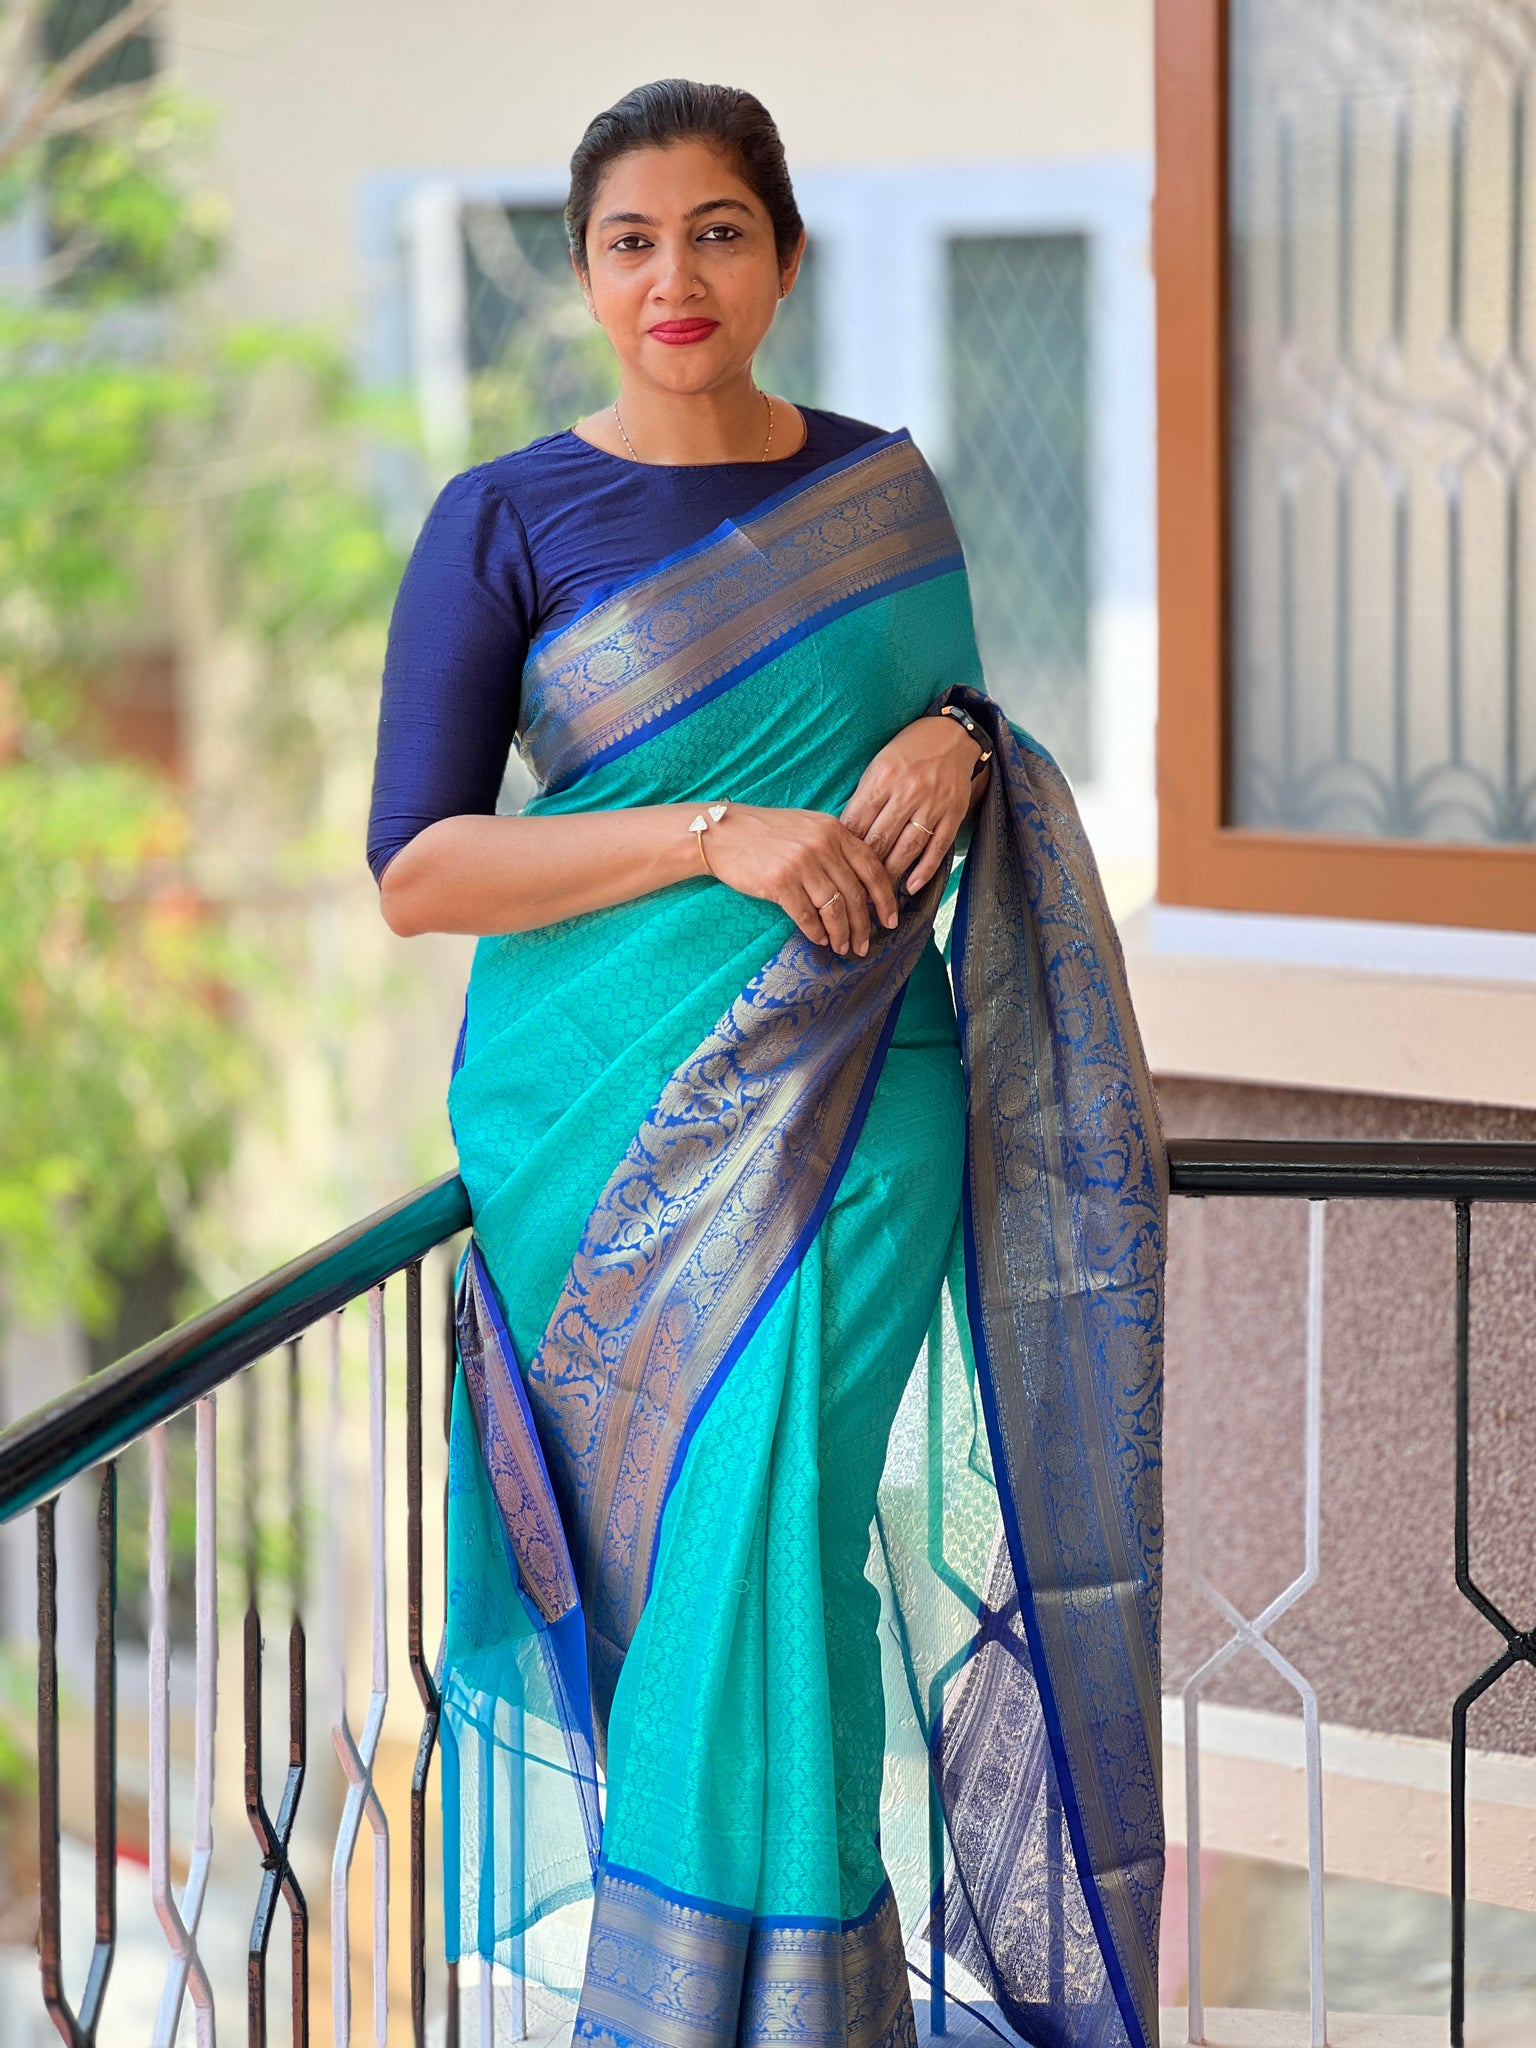 Stunning peacock blue and green color combination pattu saree with big gold  jari from Studio Ayana